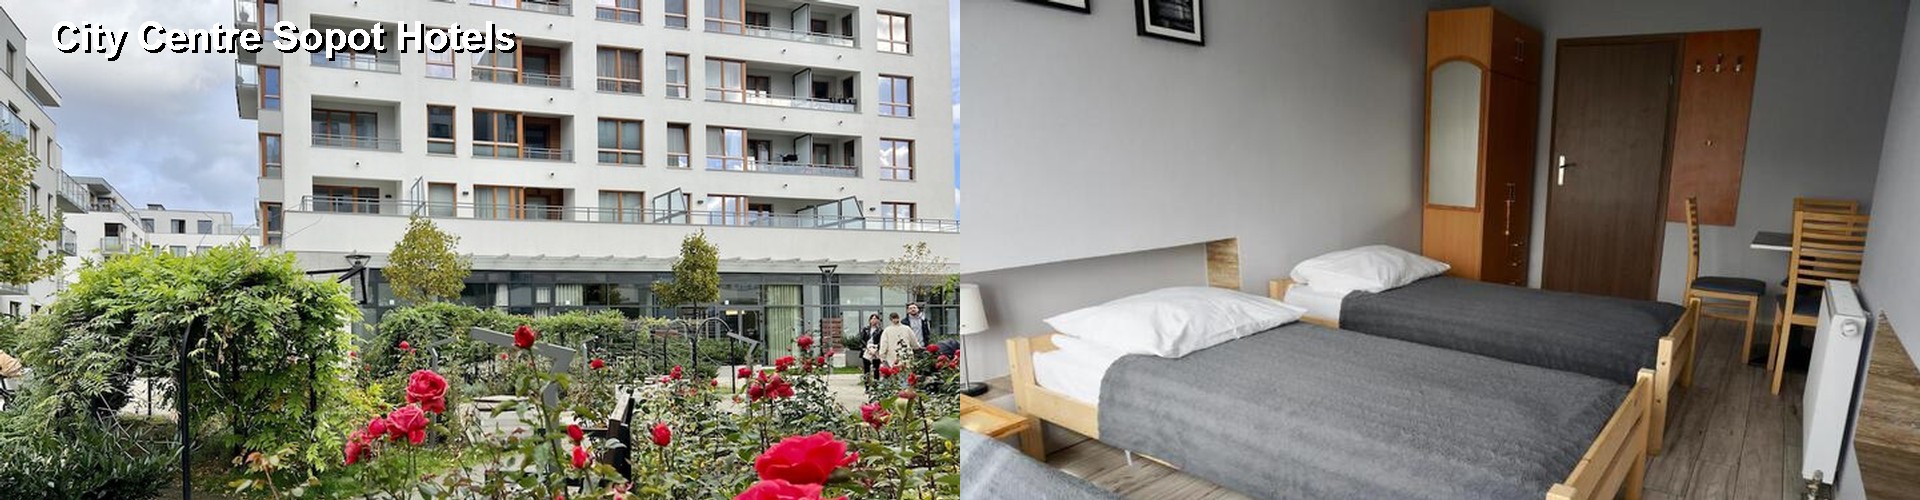 5 Best Hotels near City Centre Sopot